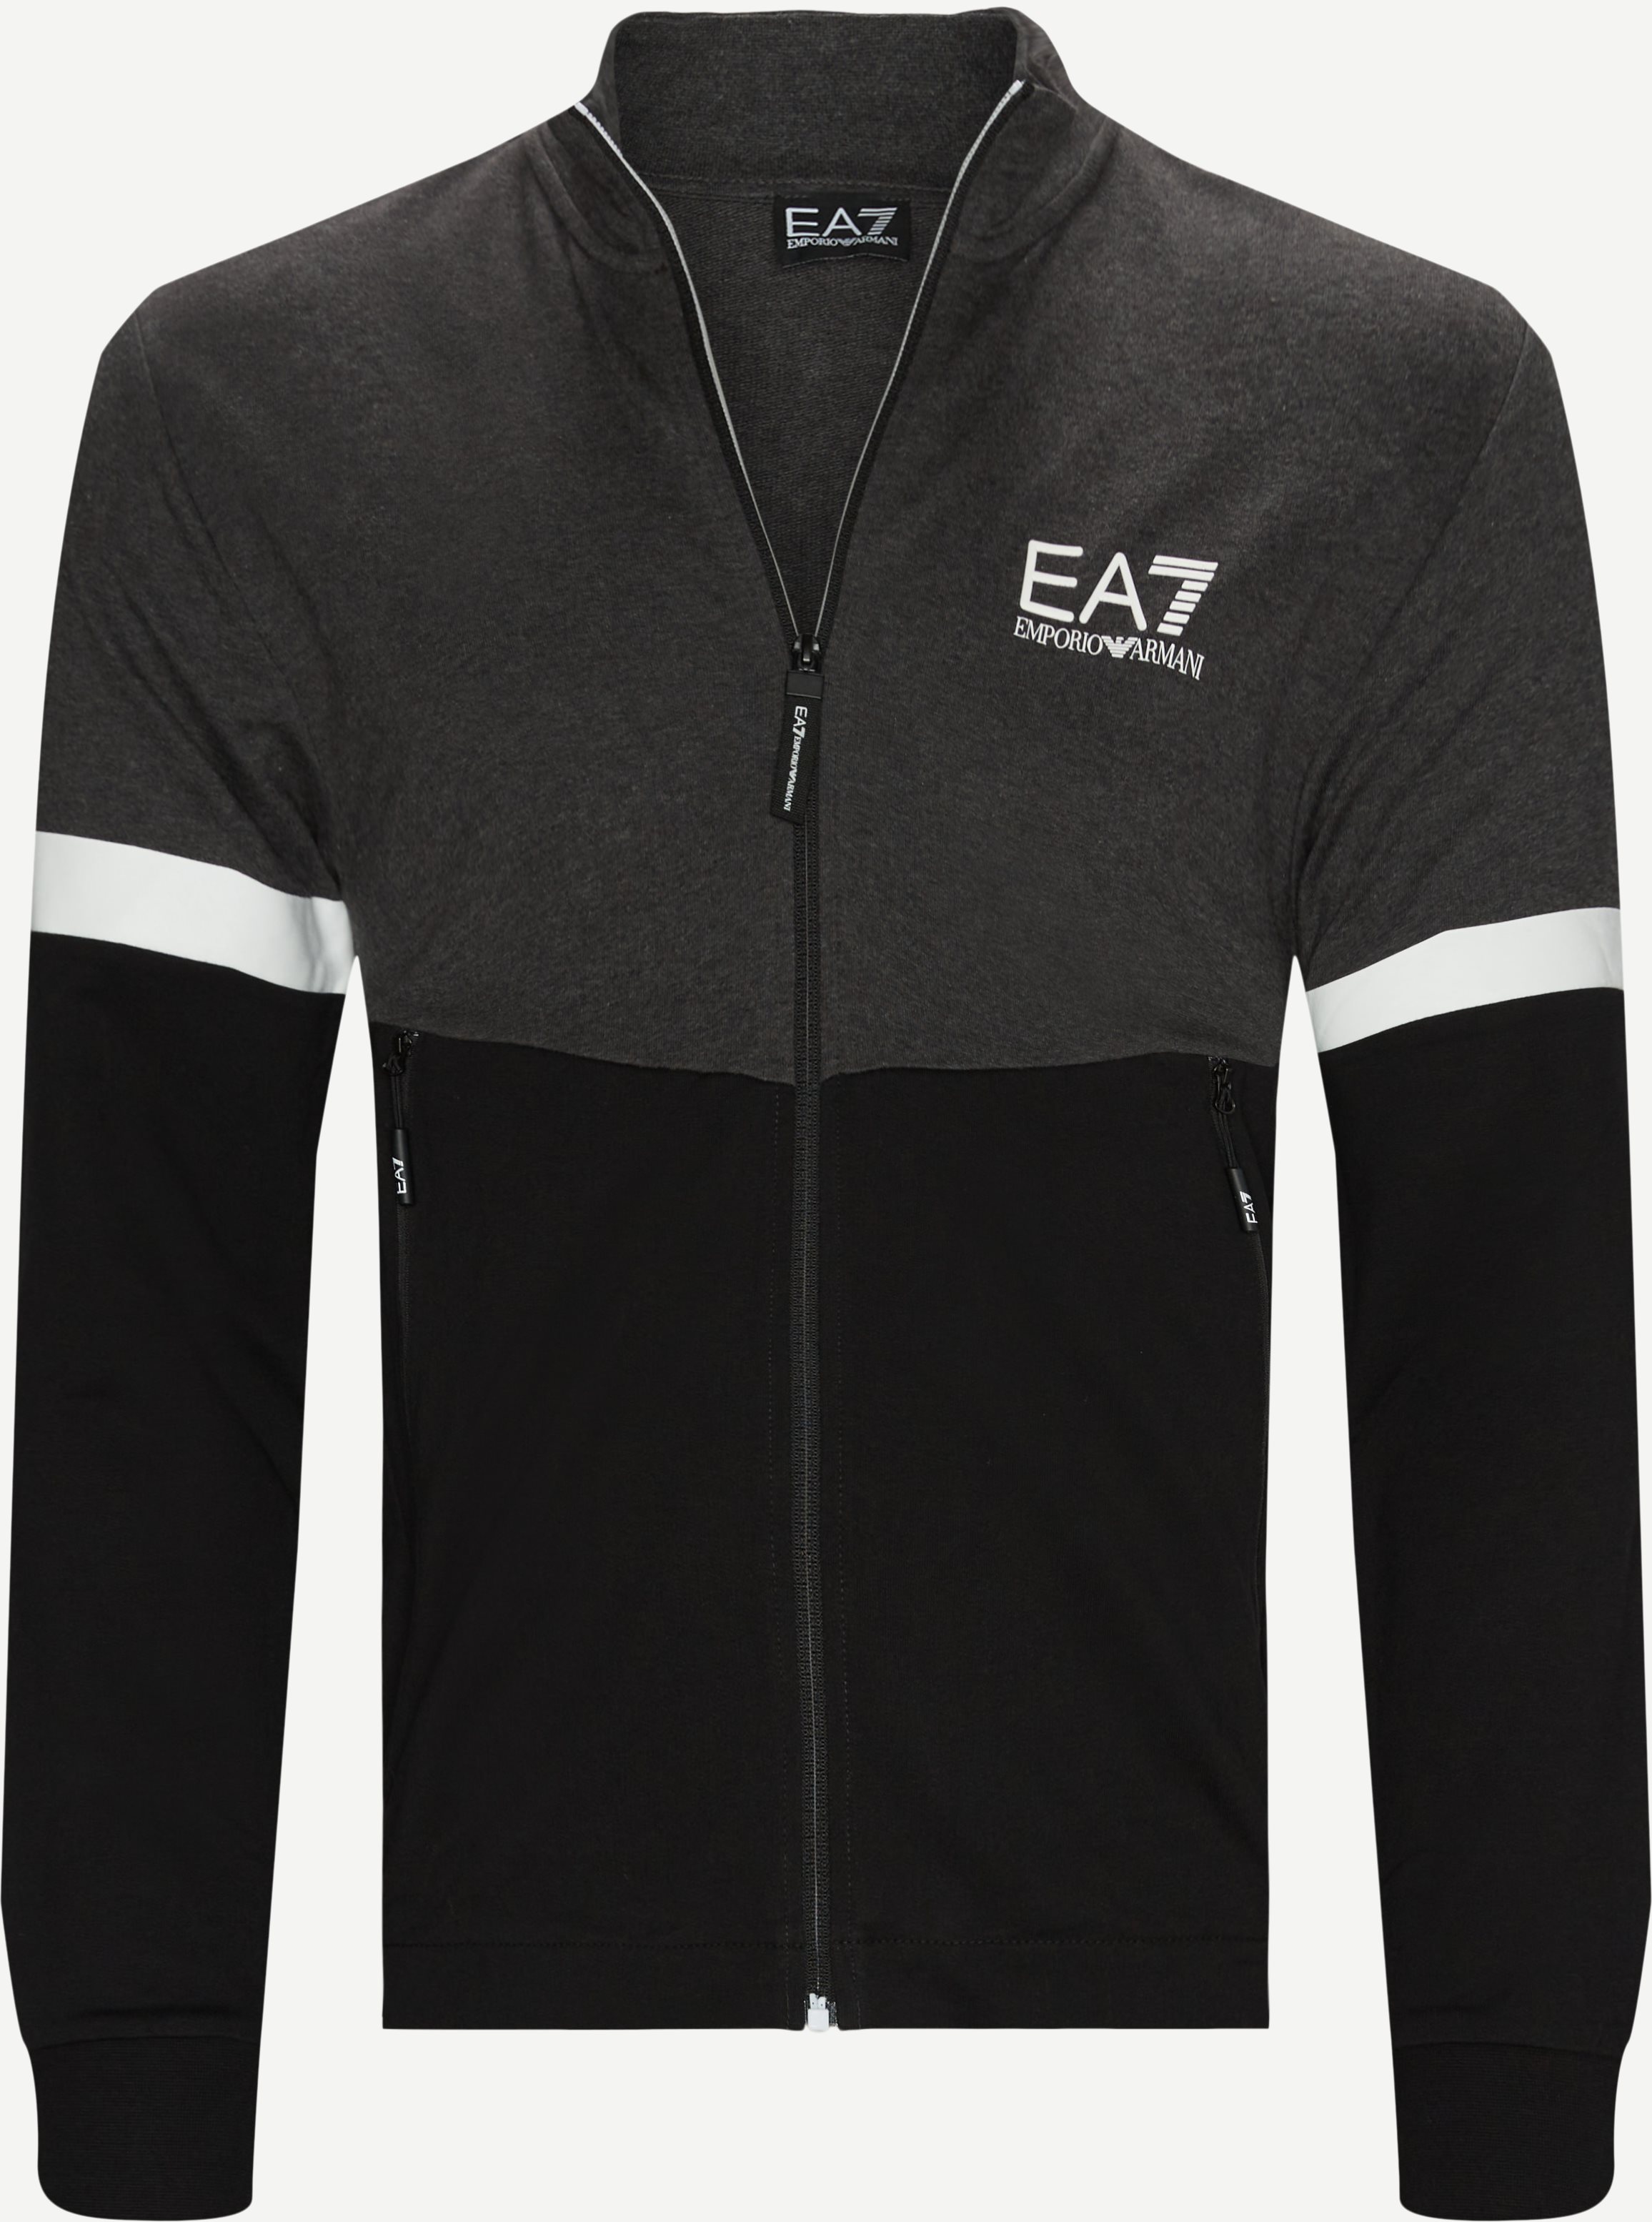 6KPV64 Zip Sweatshirt - Sweatshirts - Regular fit - Black